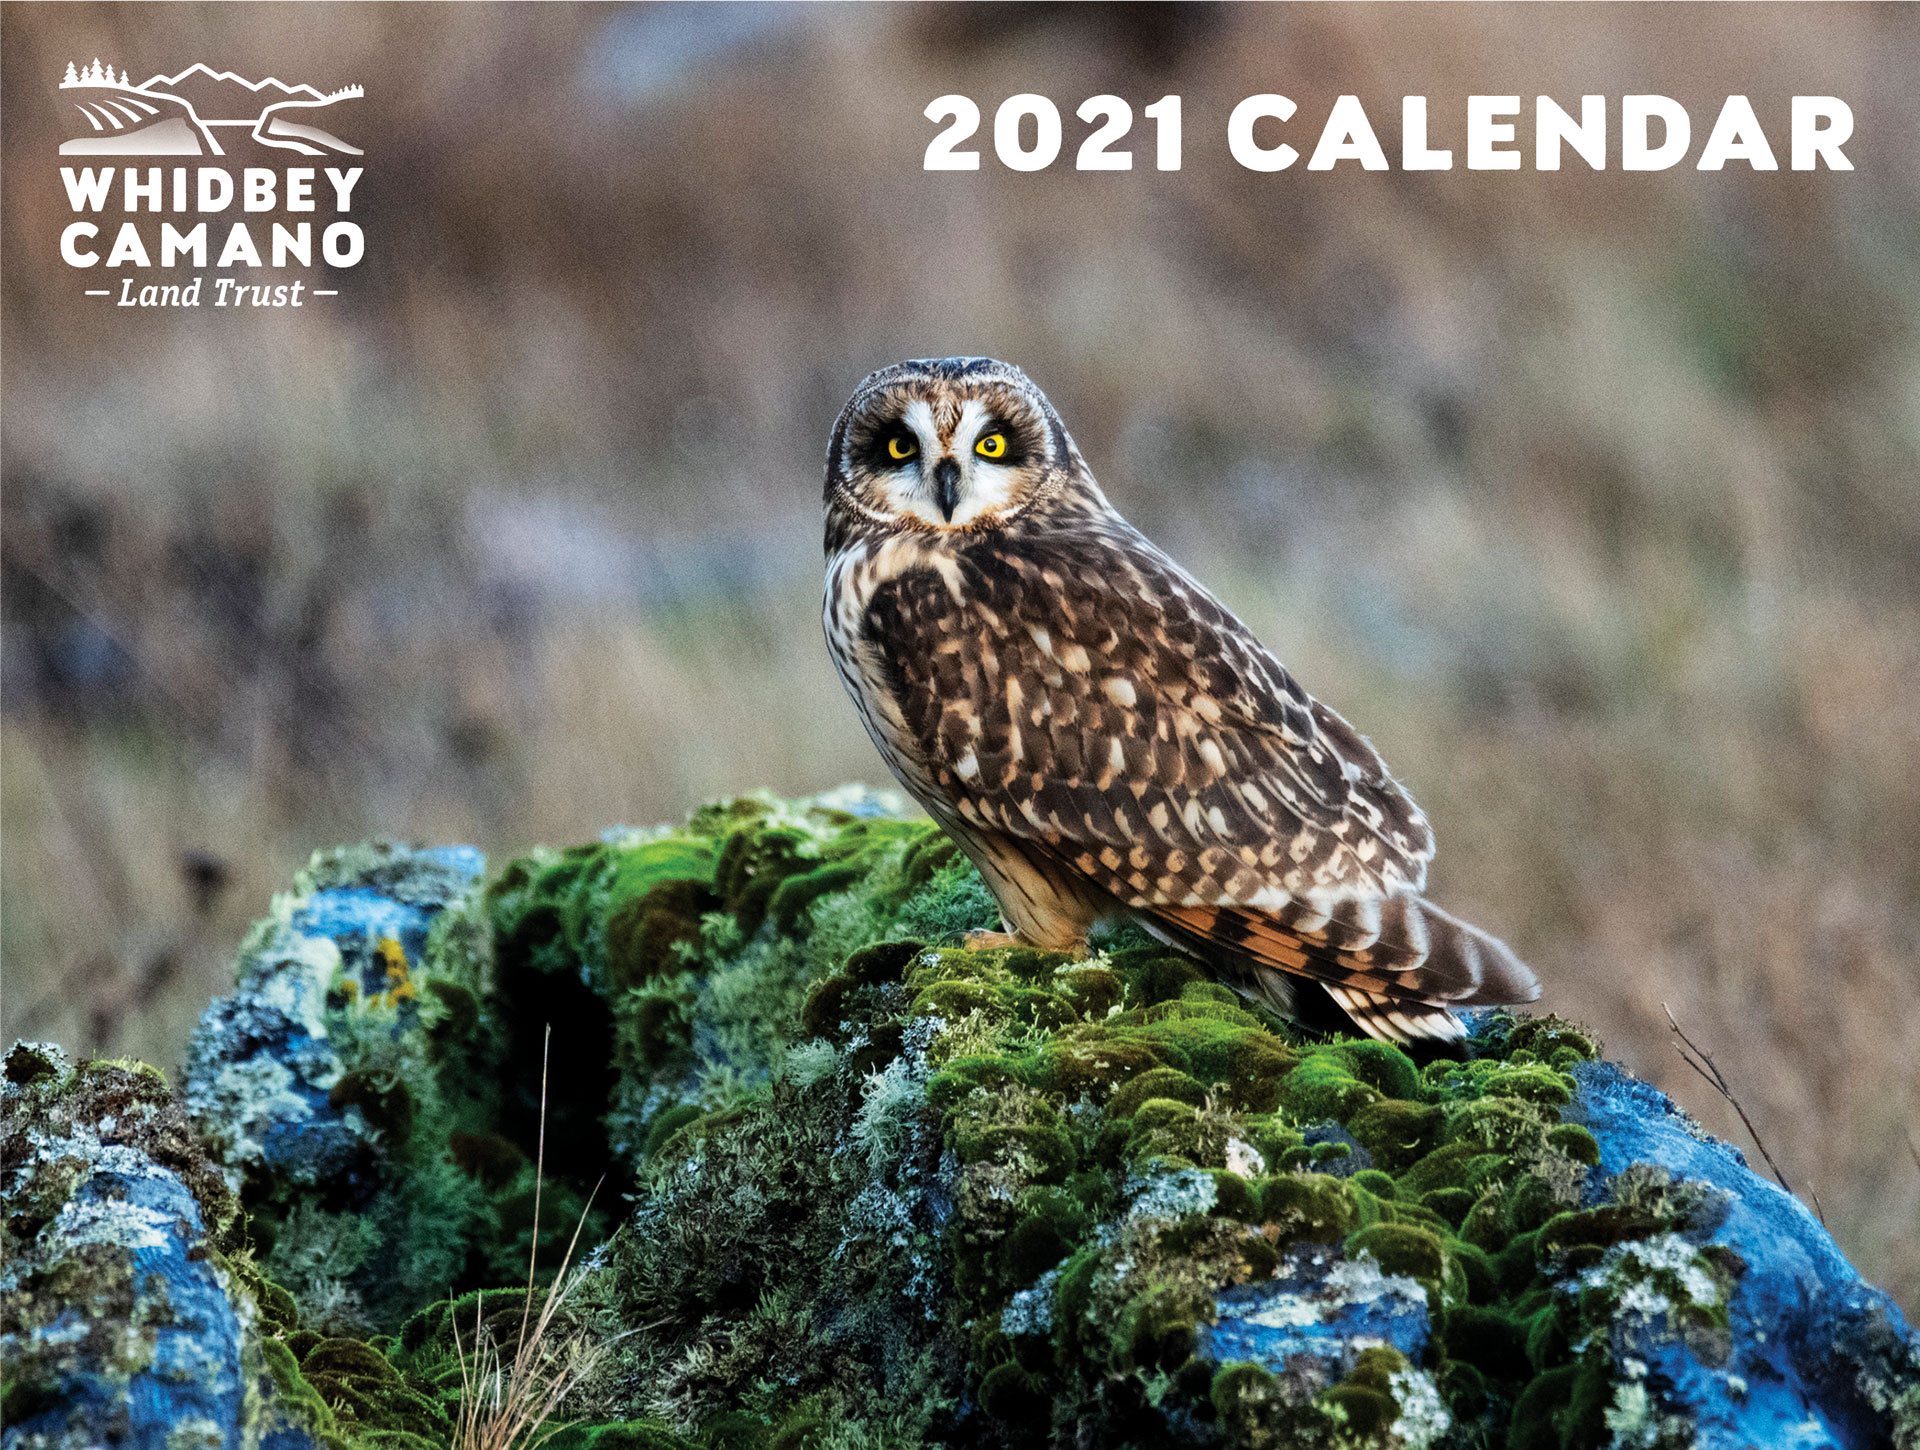 2021 Land Trust Calendar